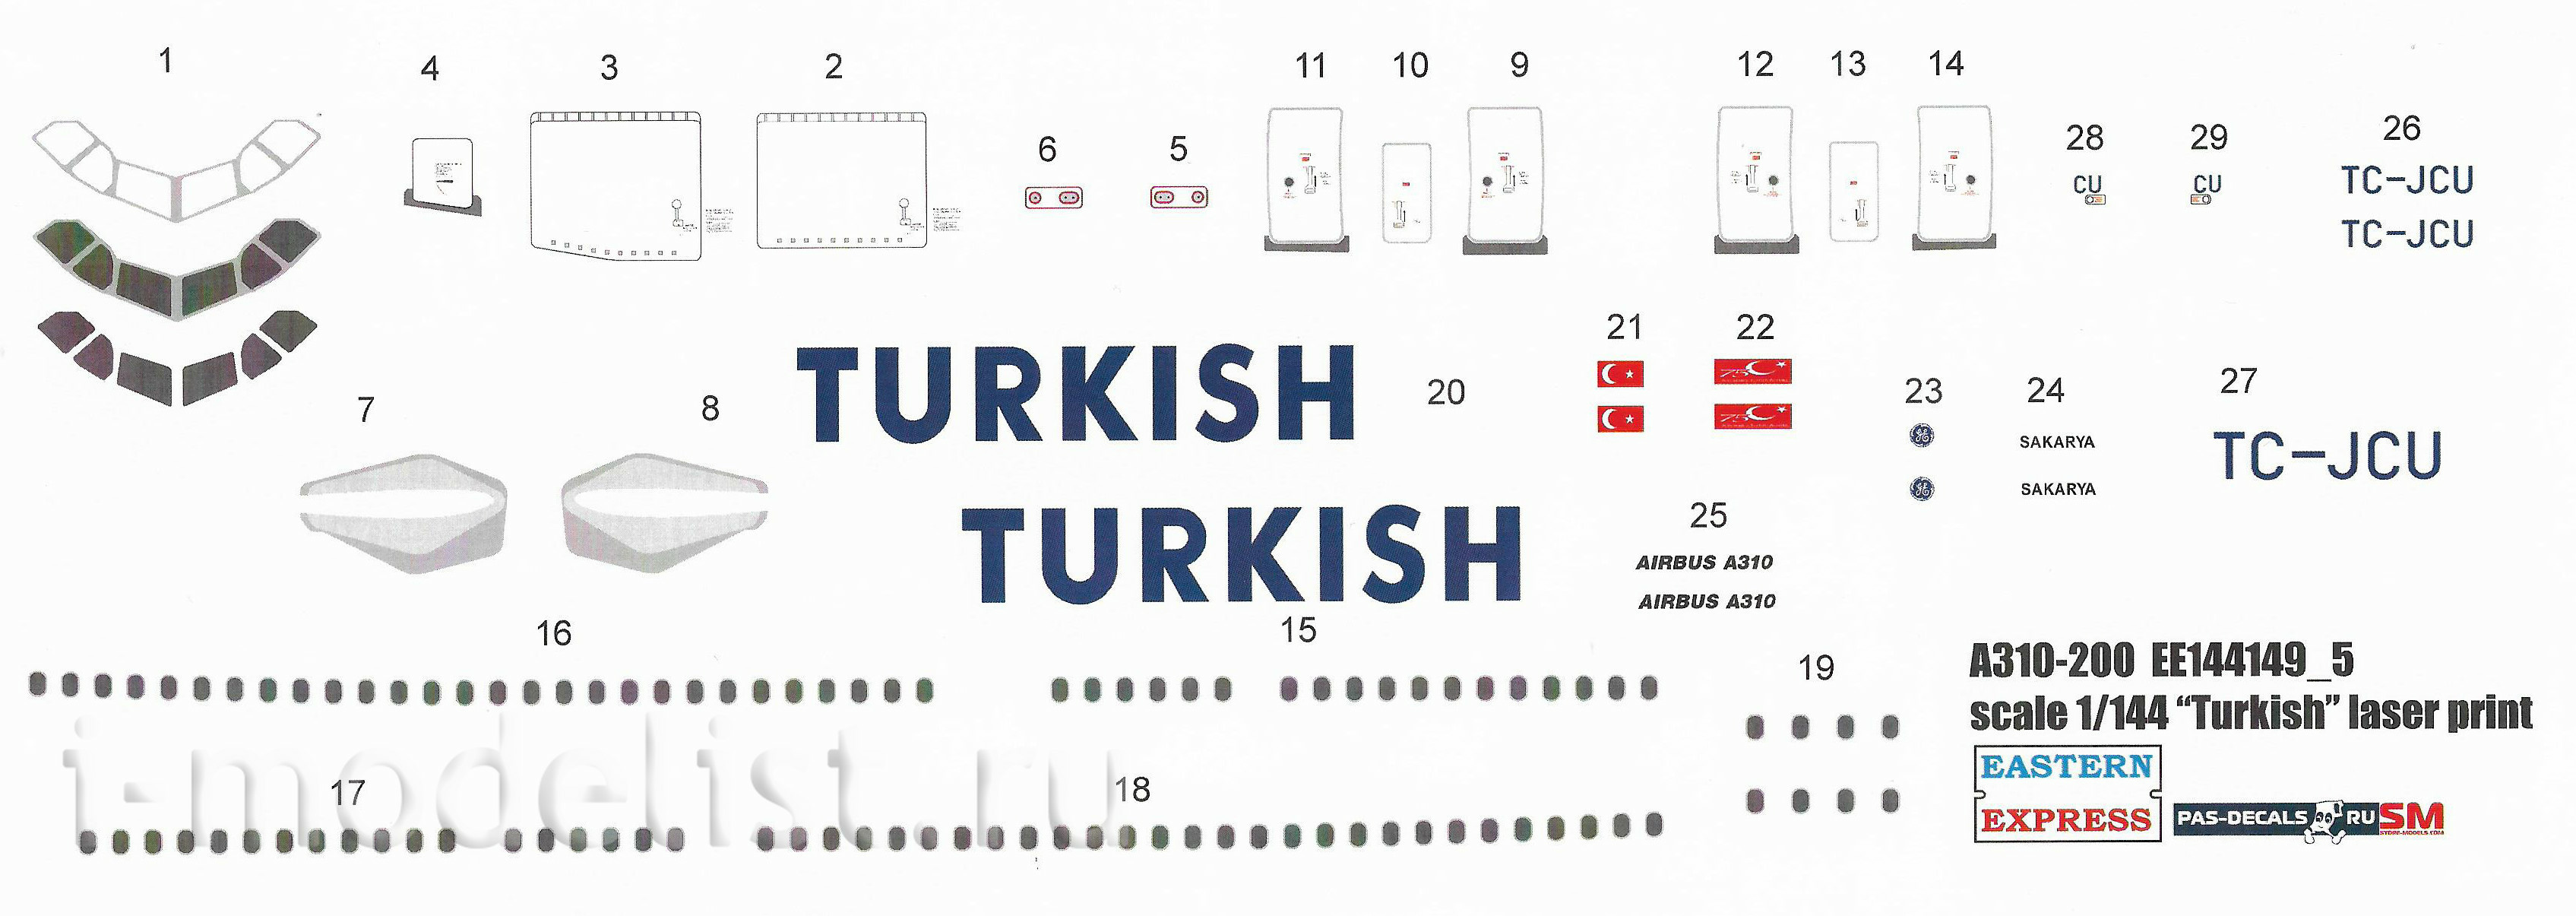 144149-5 Orient Express 1/144 A310-200 Turkish Airliner